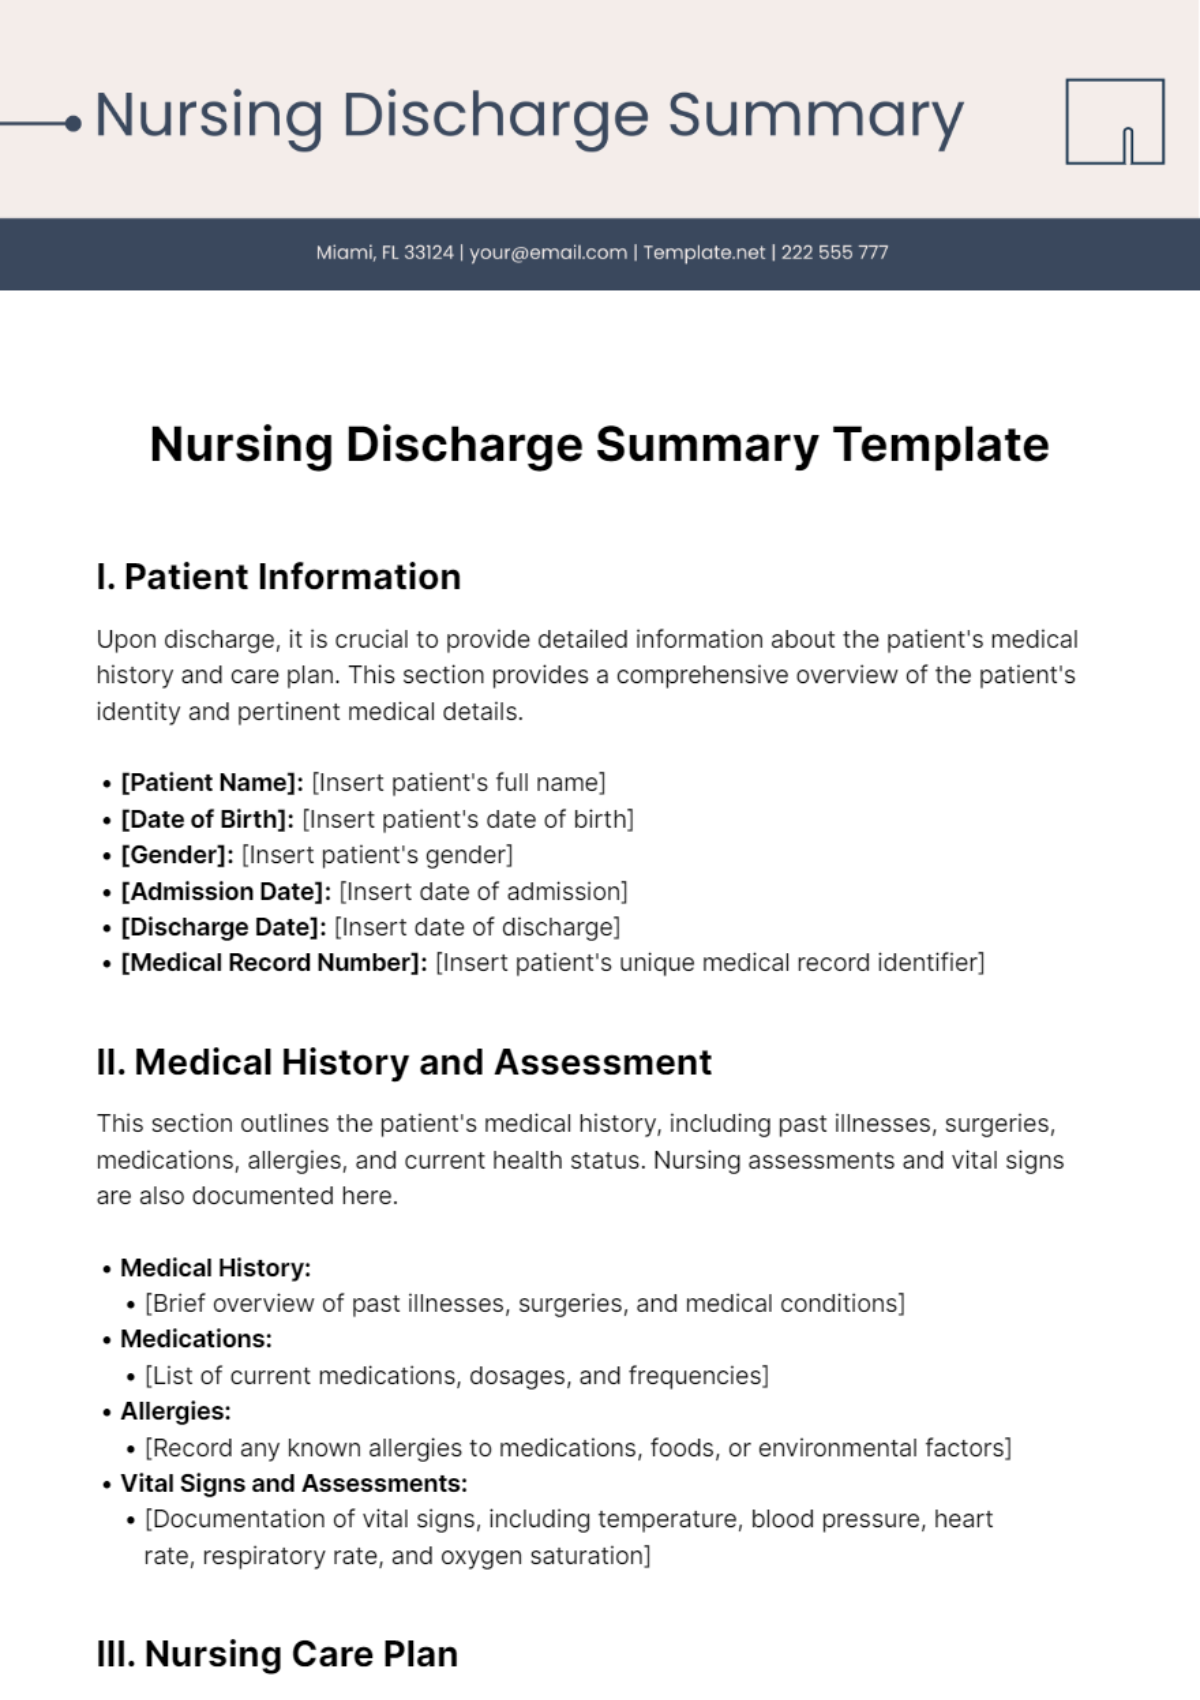 Nursing Discharge Summary Template